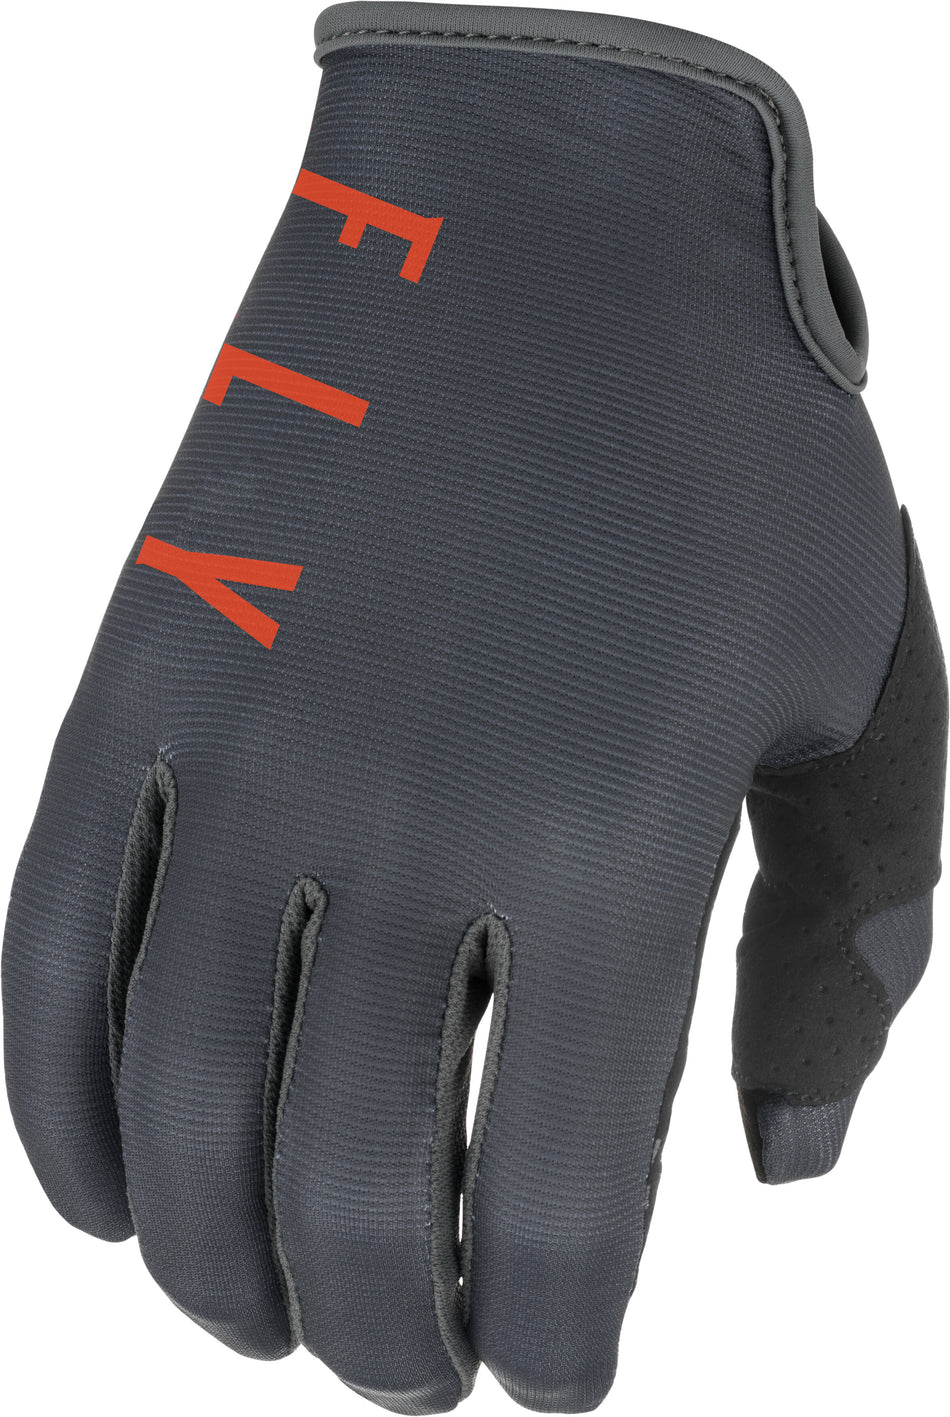 FLY RACING Lite Gloves Grey/Orange/Black Sz 07 374-71607